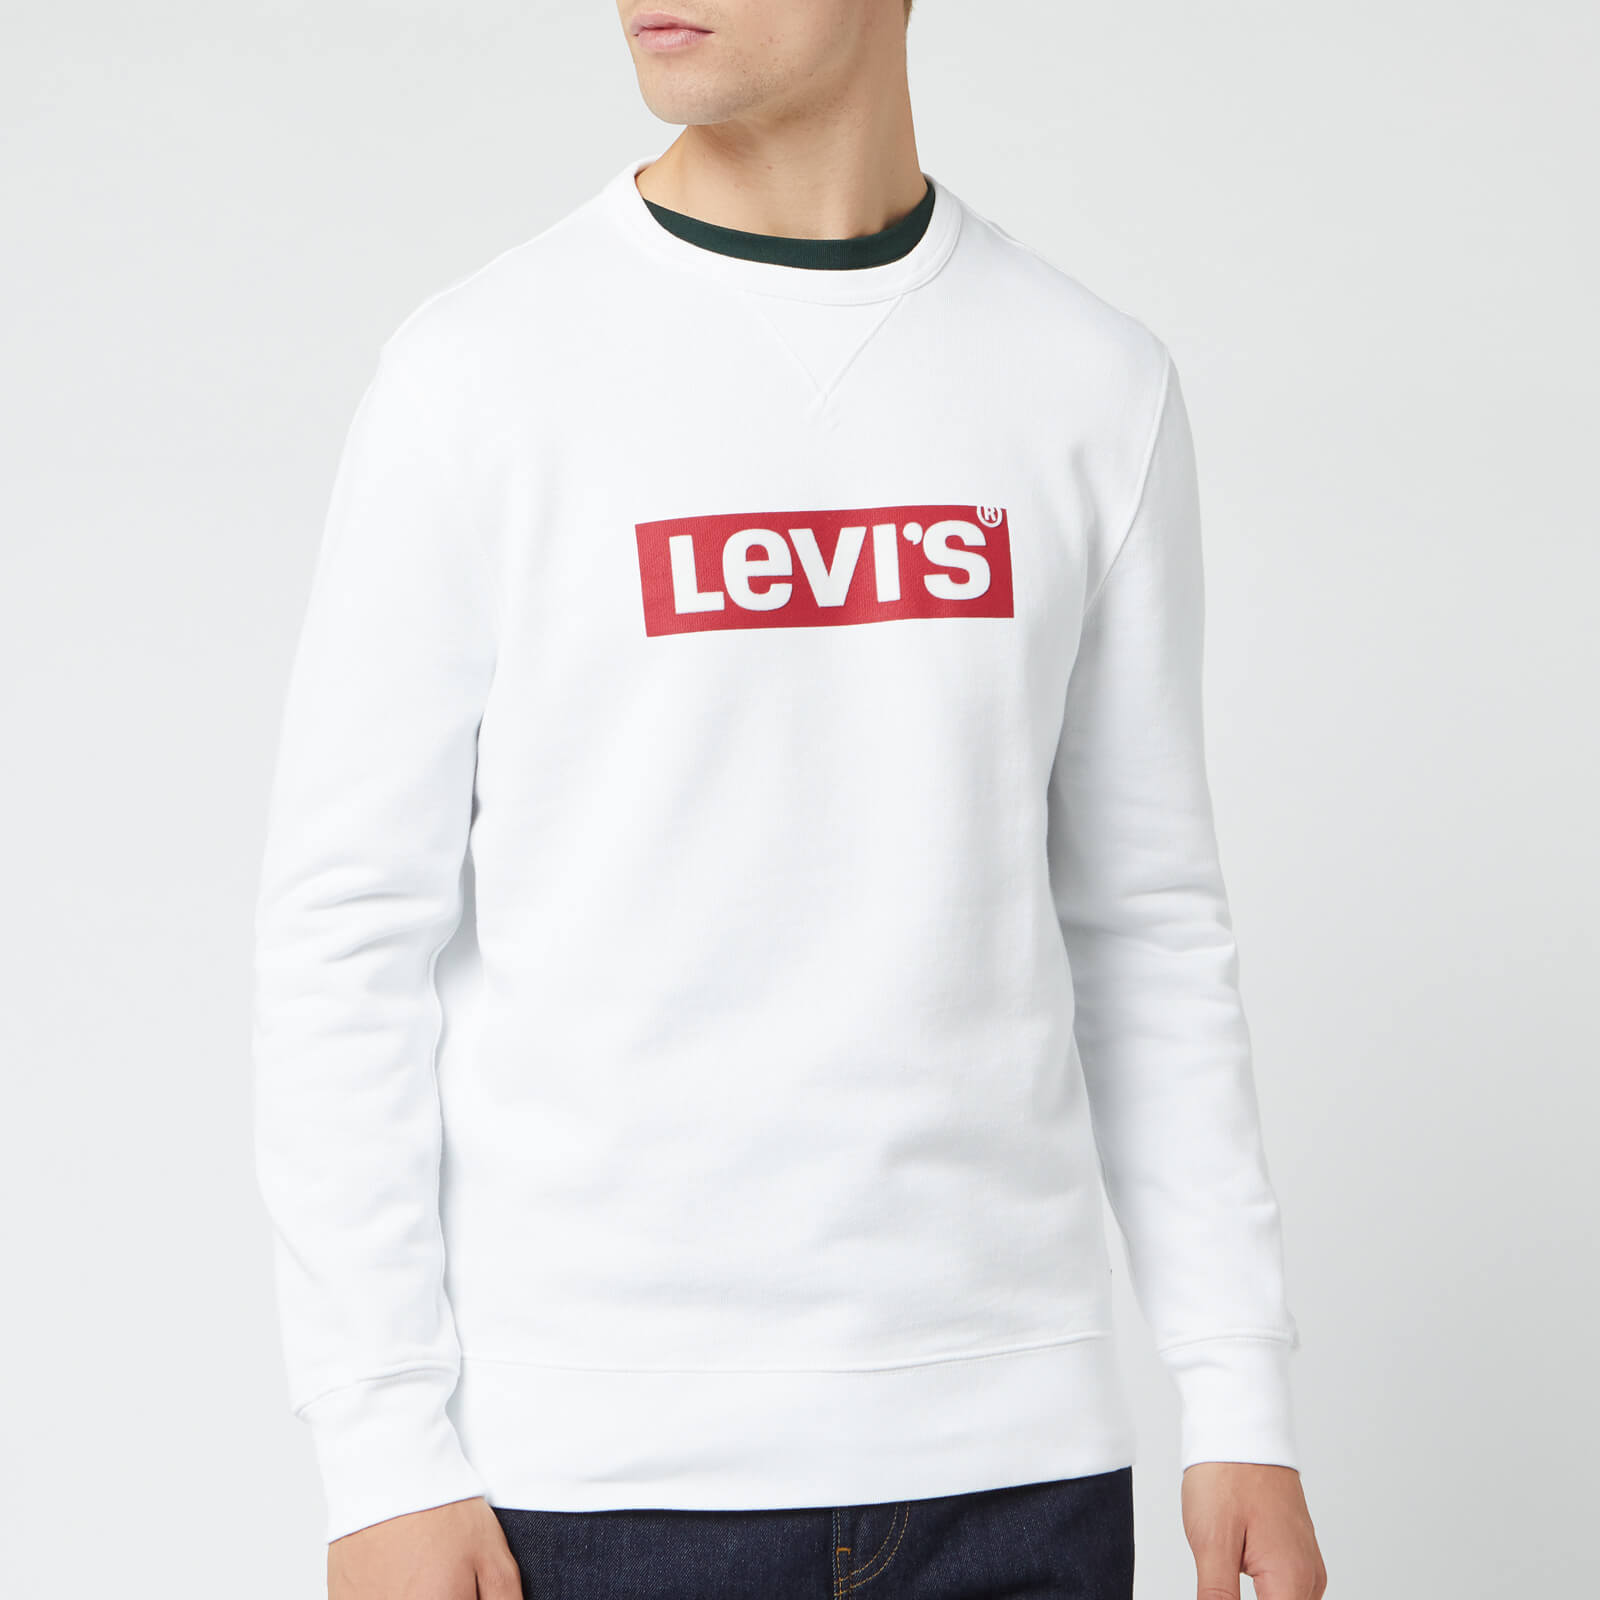 levi white sweater Cheaper Than Retail 